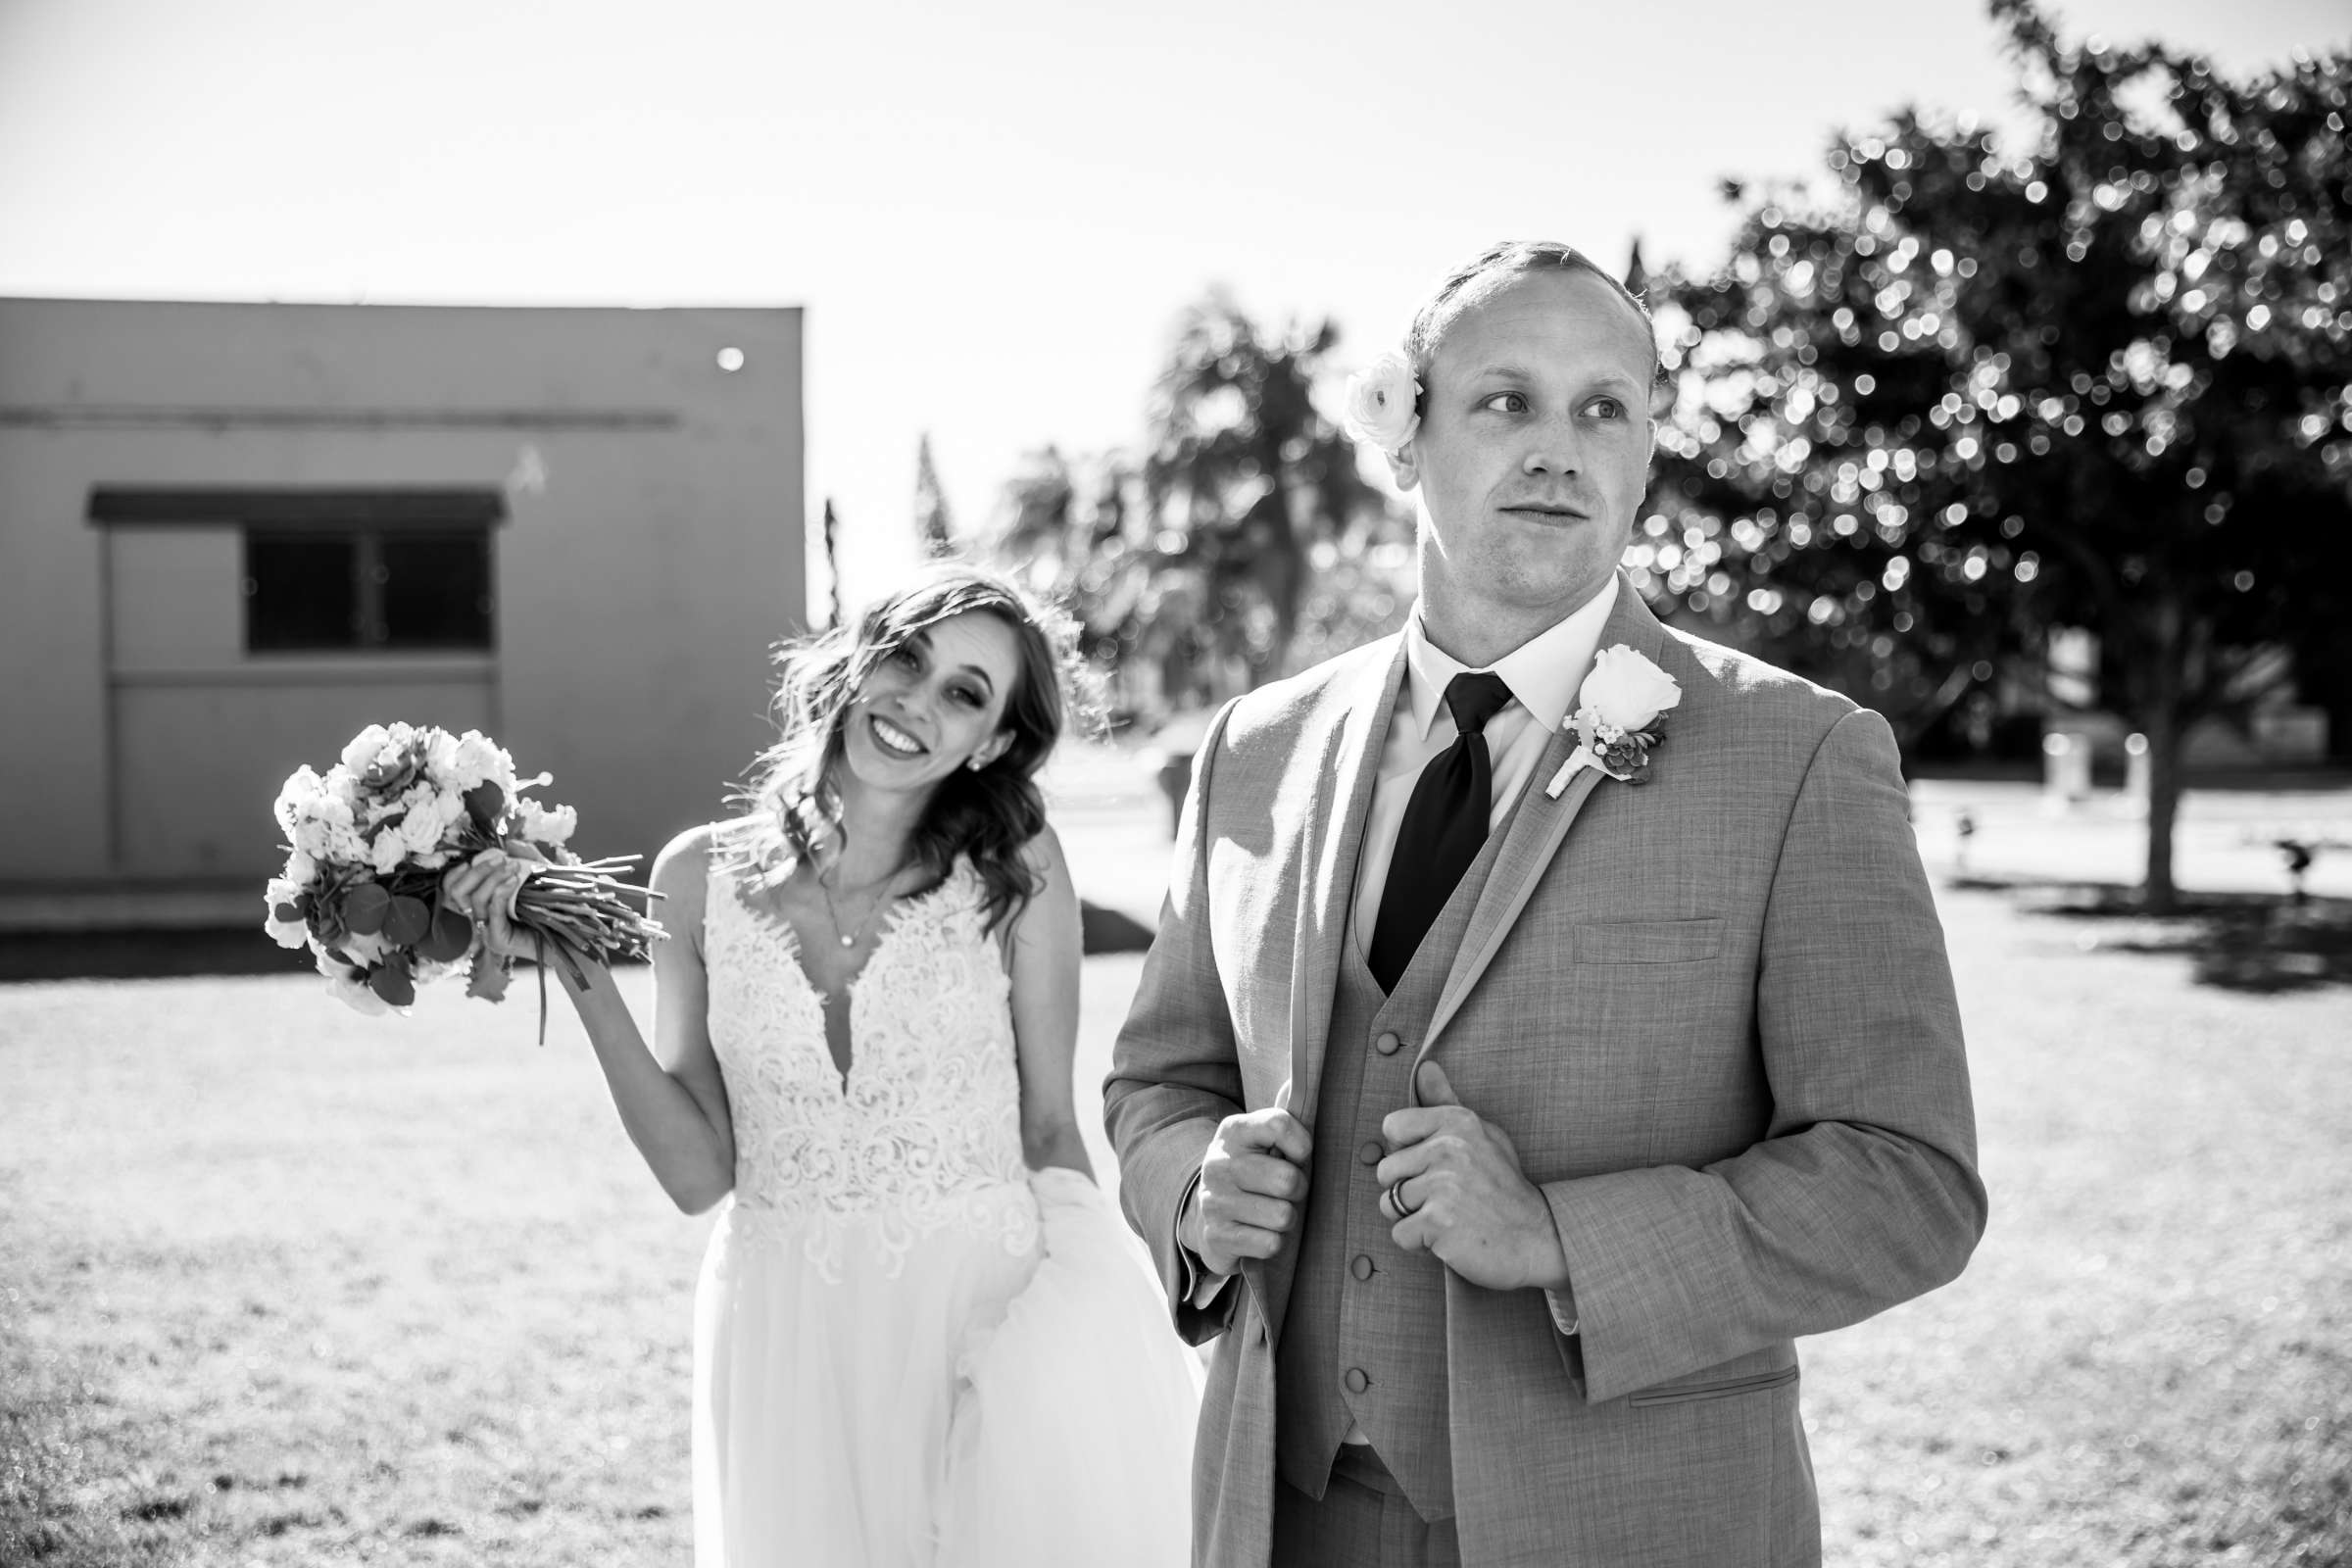 Cuvier Park-The Wedding Bowl Wedding, Jennifer and Tj Wedding Photo #23 by True Photography